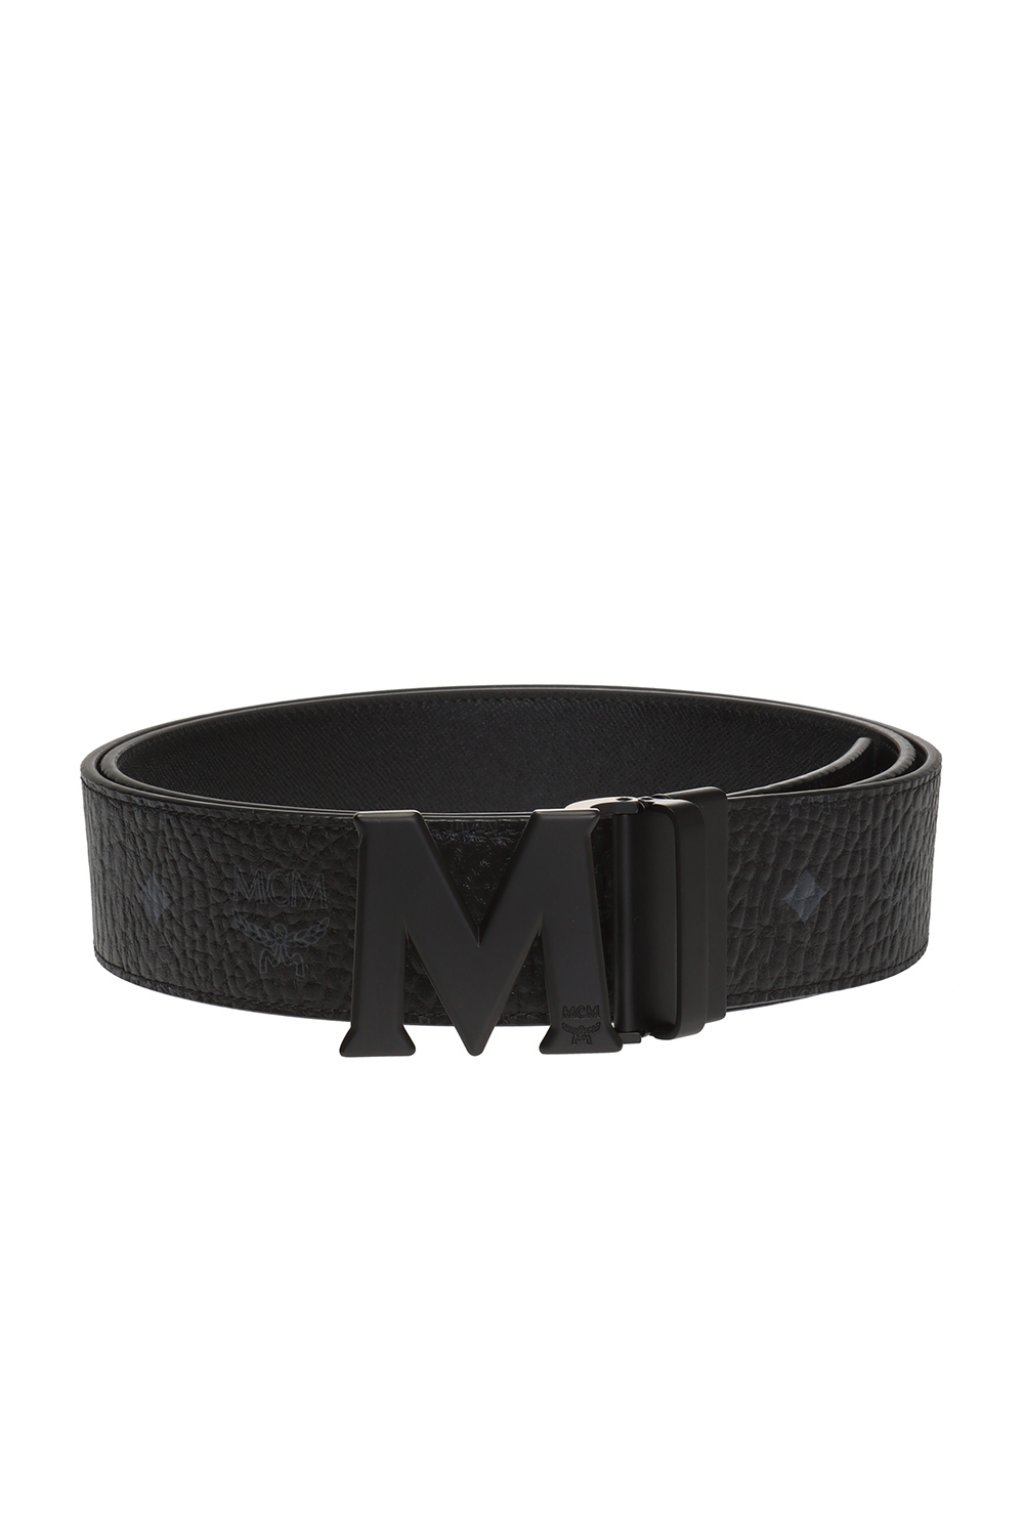 MCM Belt with logo, Men's Accessories